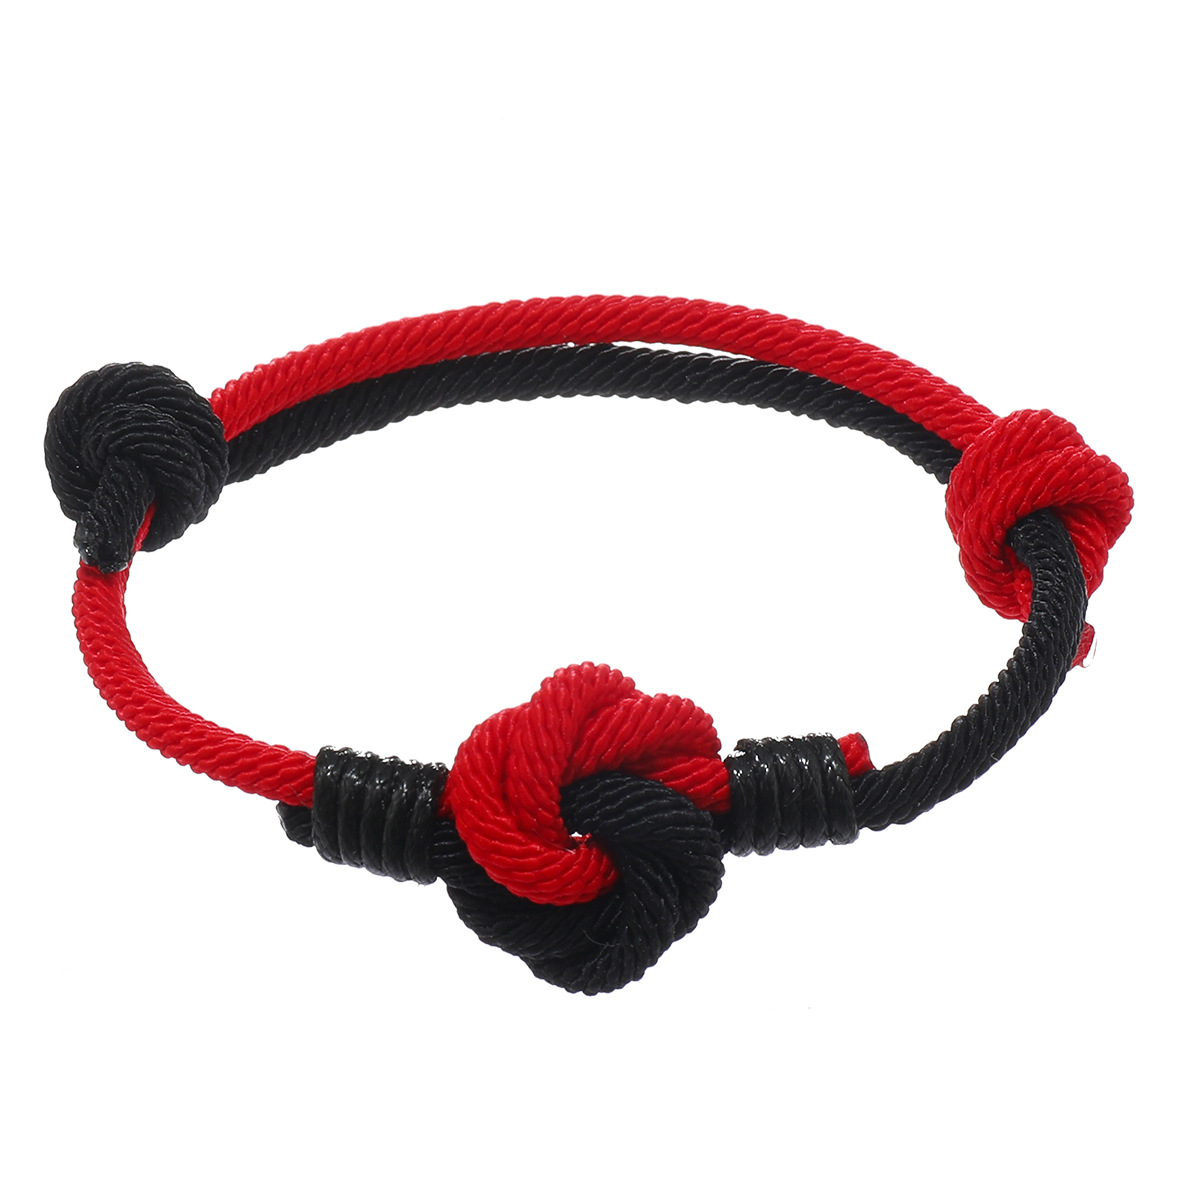 Black + red (Mandala knot)